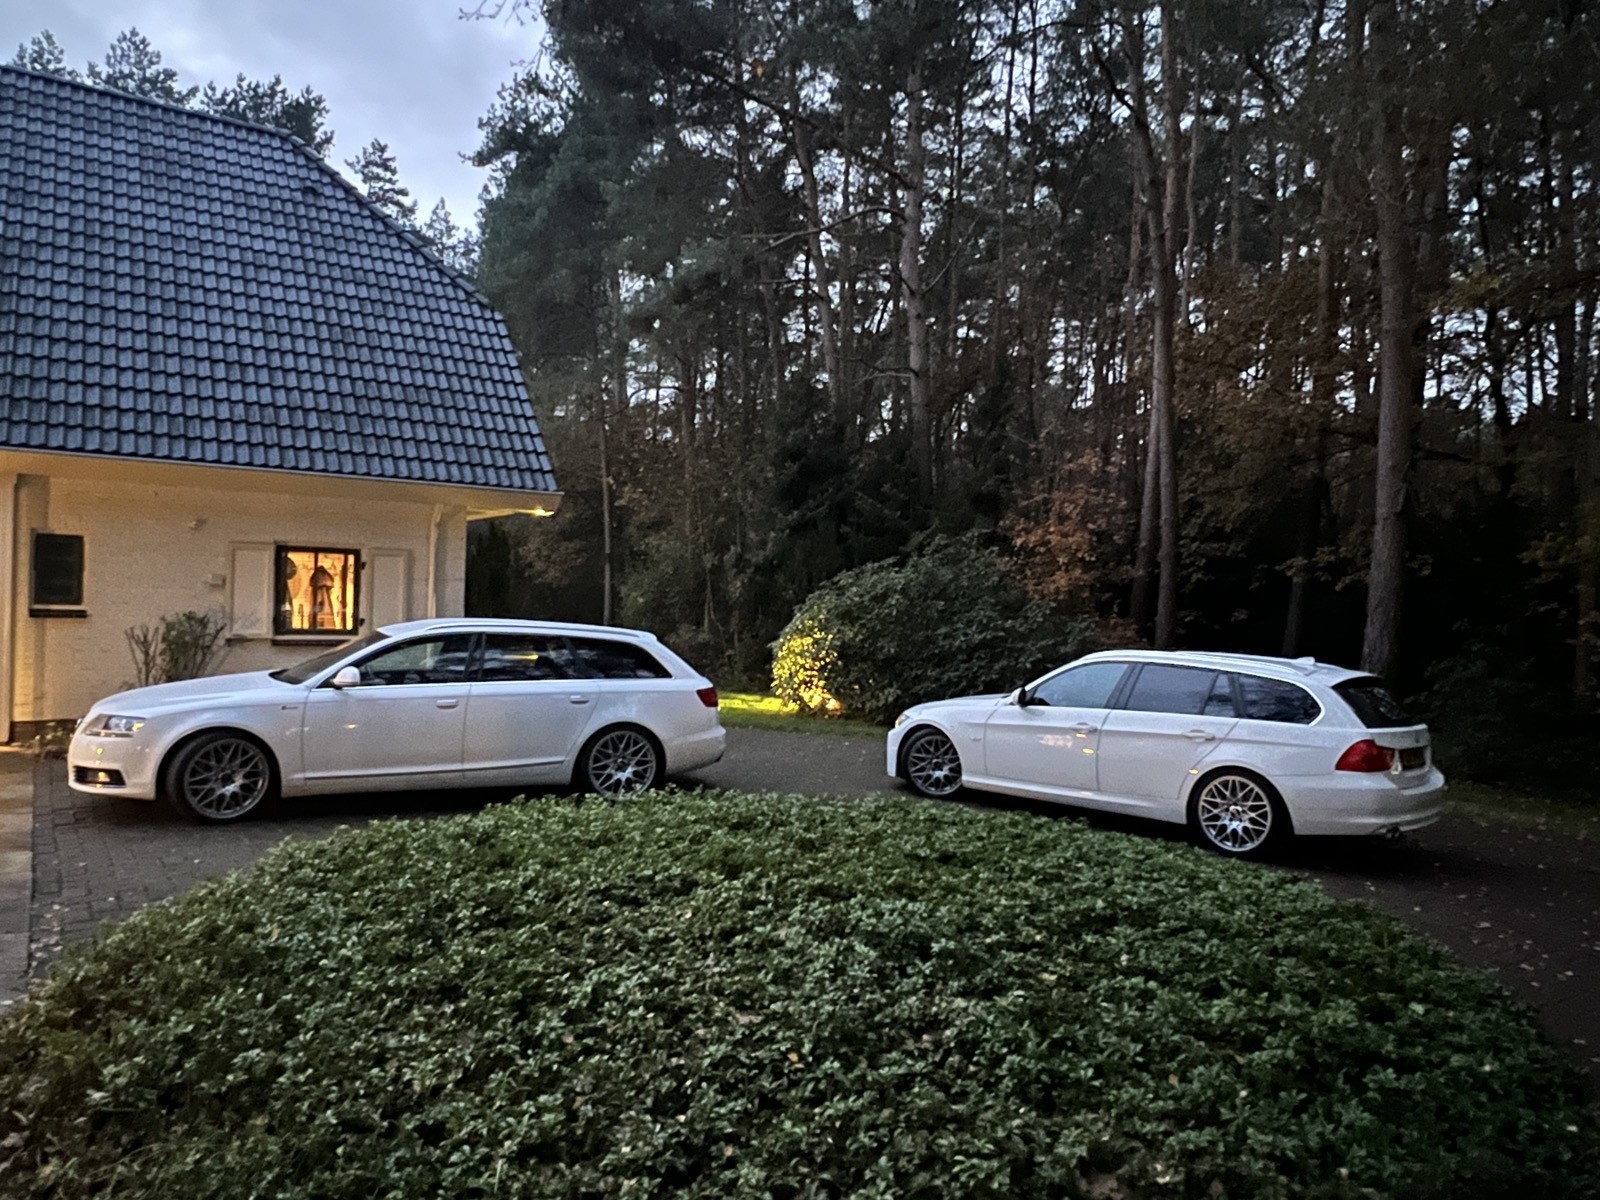 Audi A6 upgrades